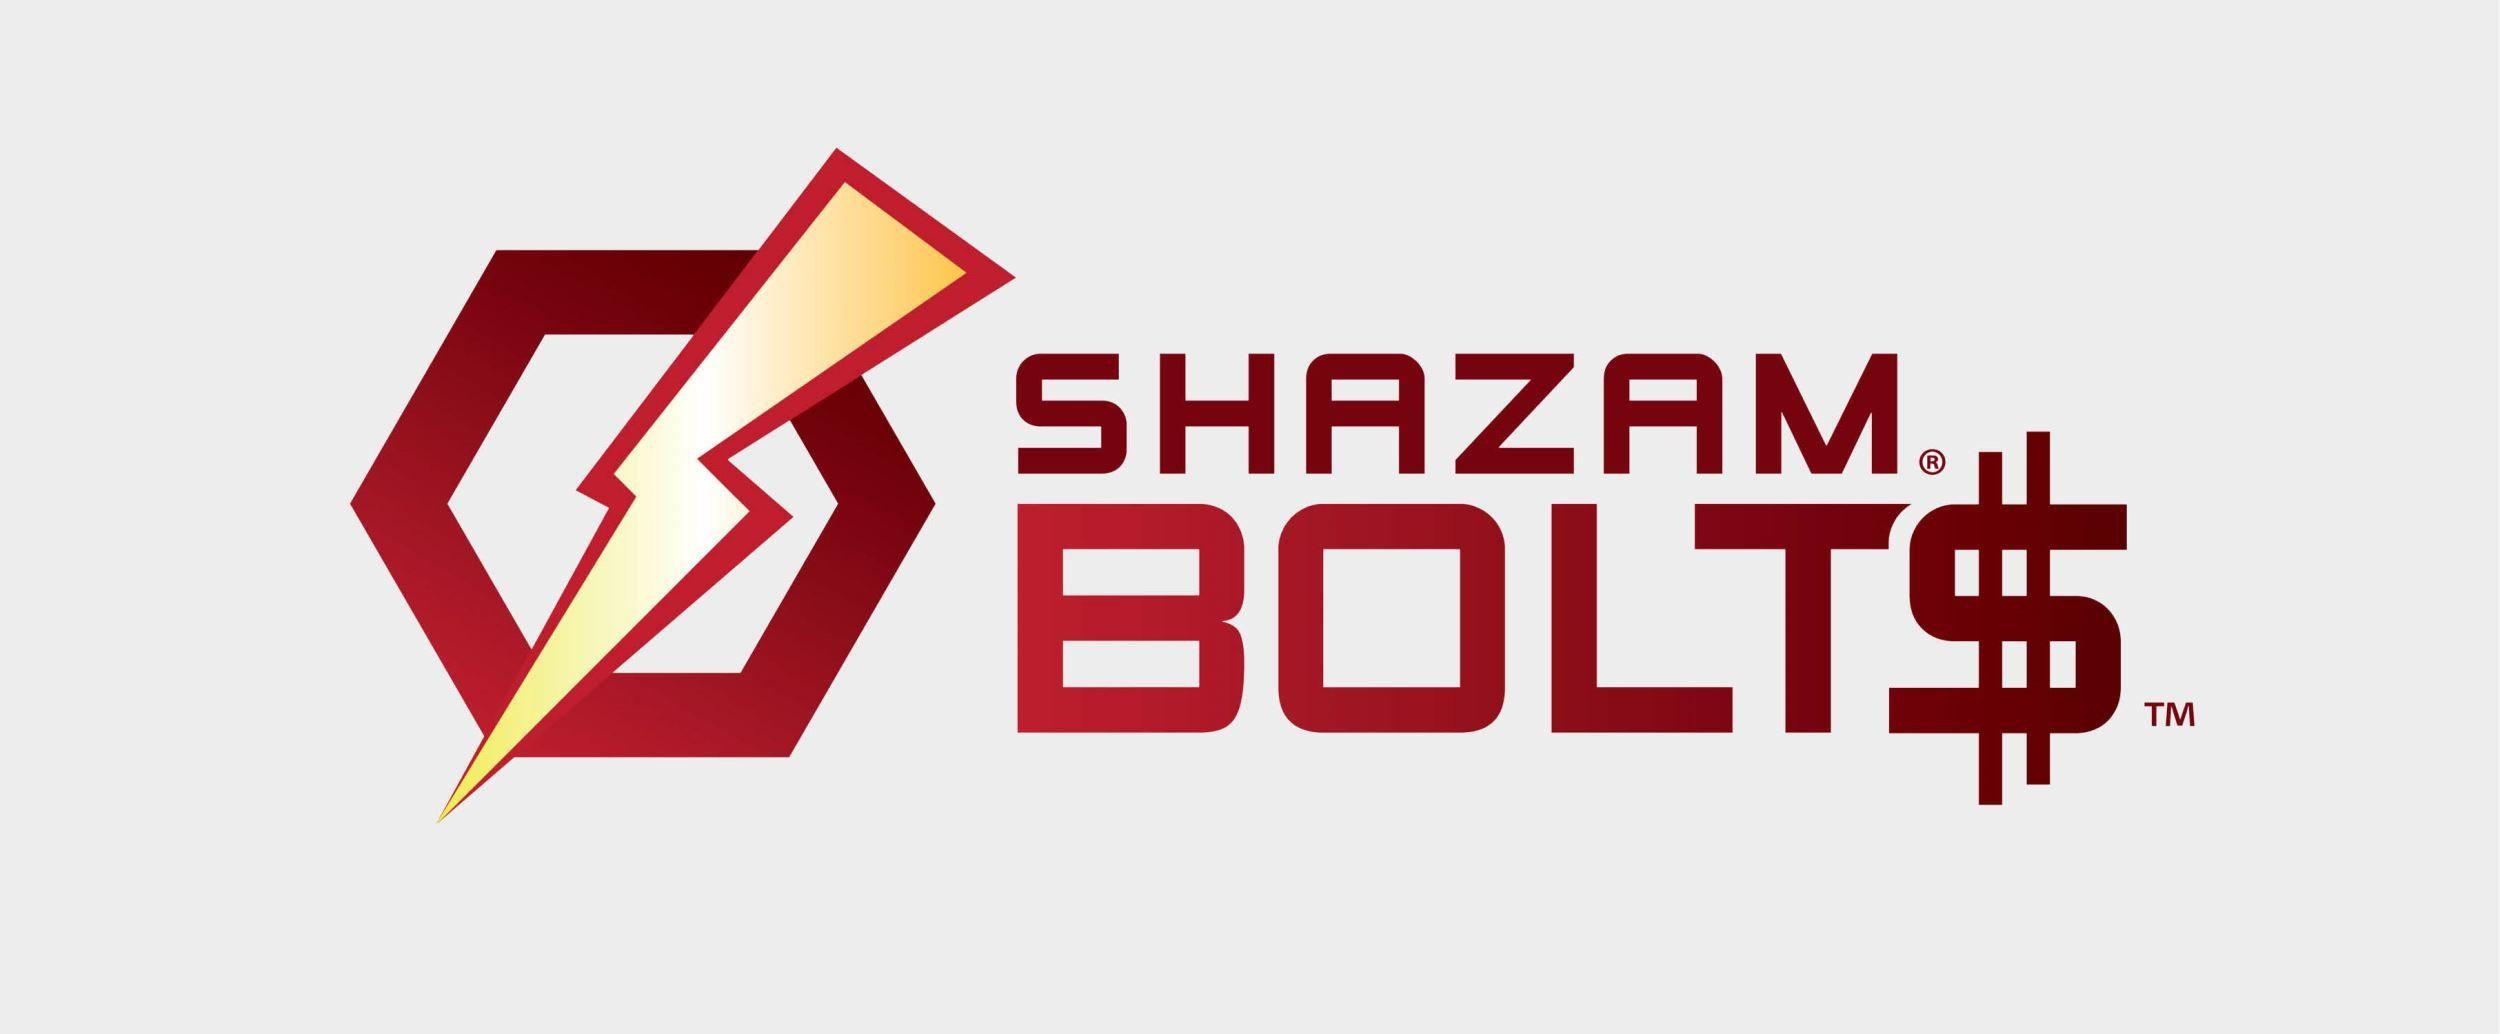 Bolts Logo - SHAZAM BOLT$ State Bank